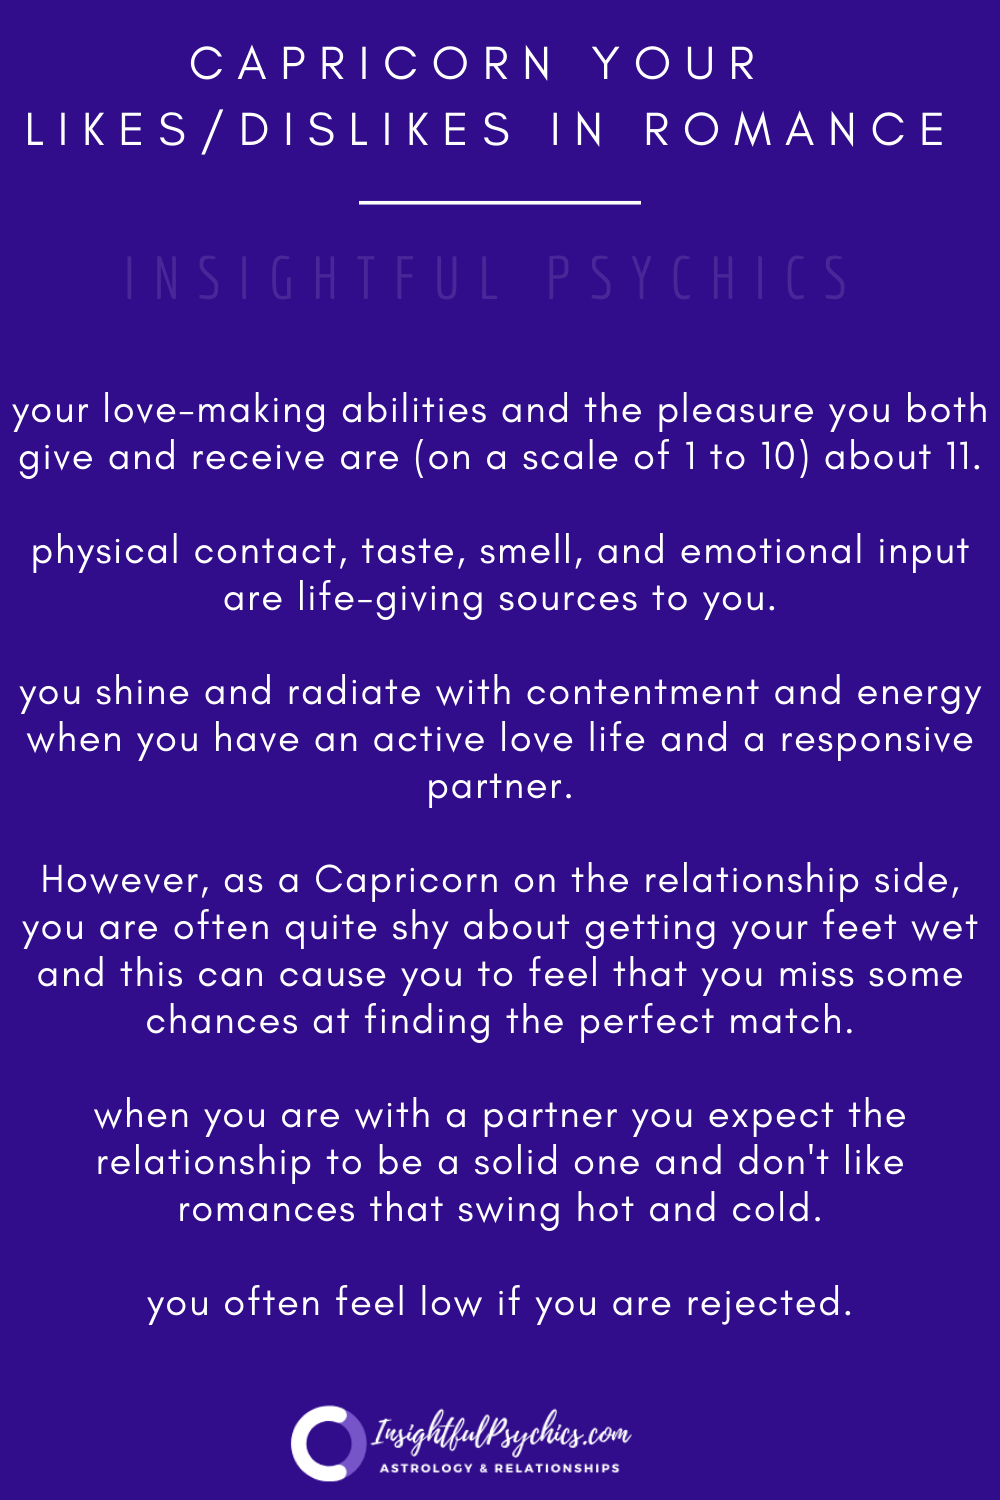 Capricorn Romance and Relationship Traits